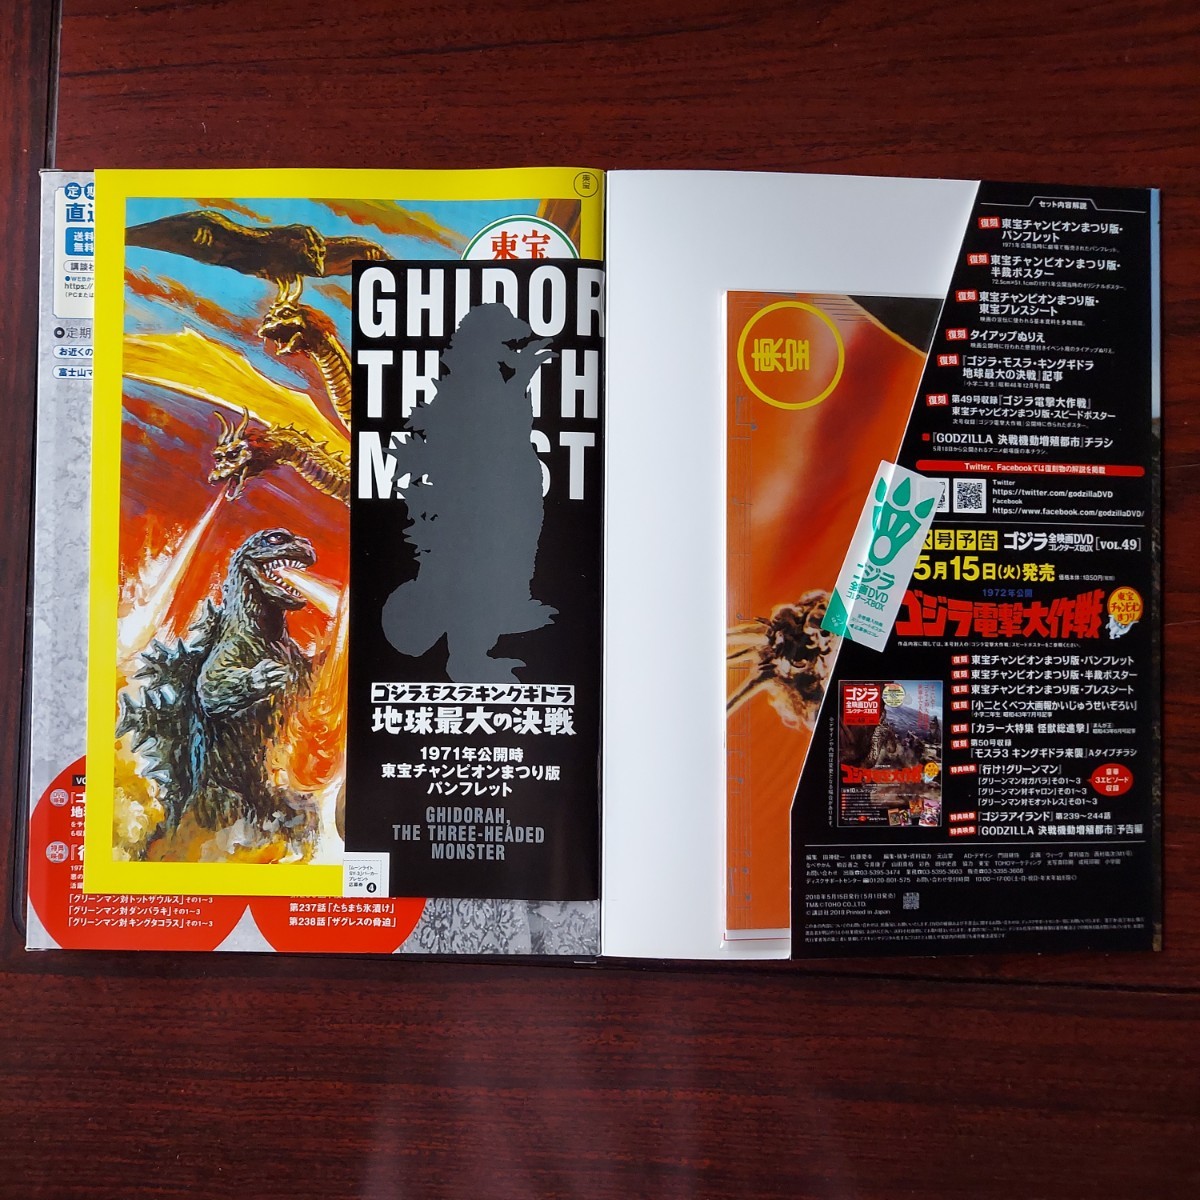  Godzilla * Mothra * King Giddra the earth maximum. decision war 48*DVD appendix completion goods * Godzilla all movie DVD collectors BOX higashi . Champion ...* poster unopened 